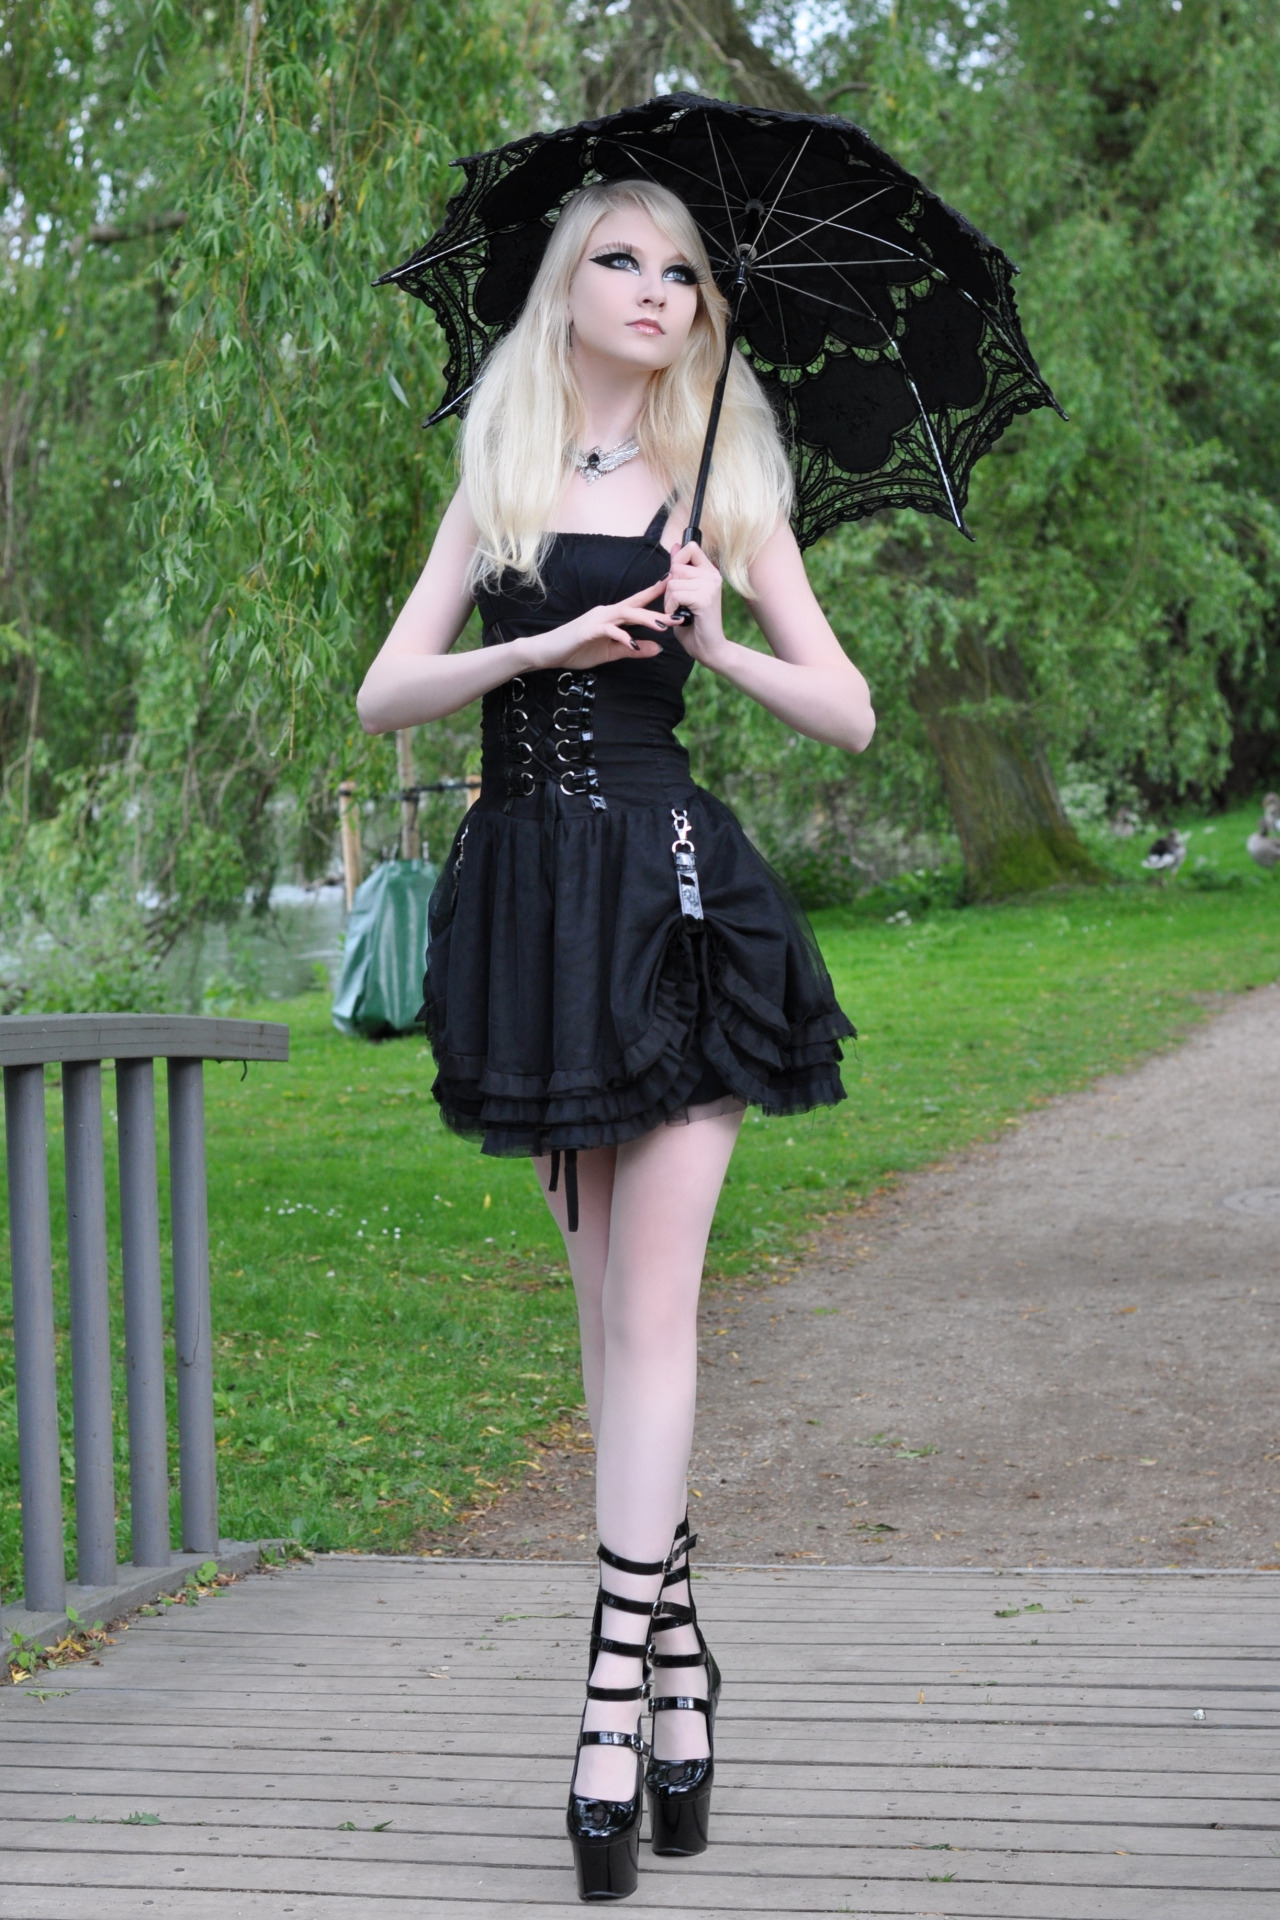 Maria Amanda Women Model Blonde Long Hair Legs Umbrella Outdoors Trees Grass Black Dress Gothic Alt  1280x1920